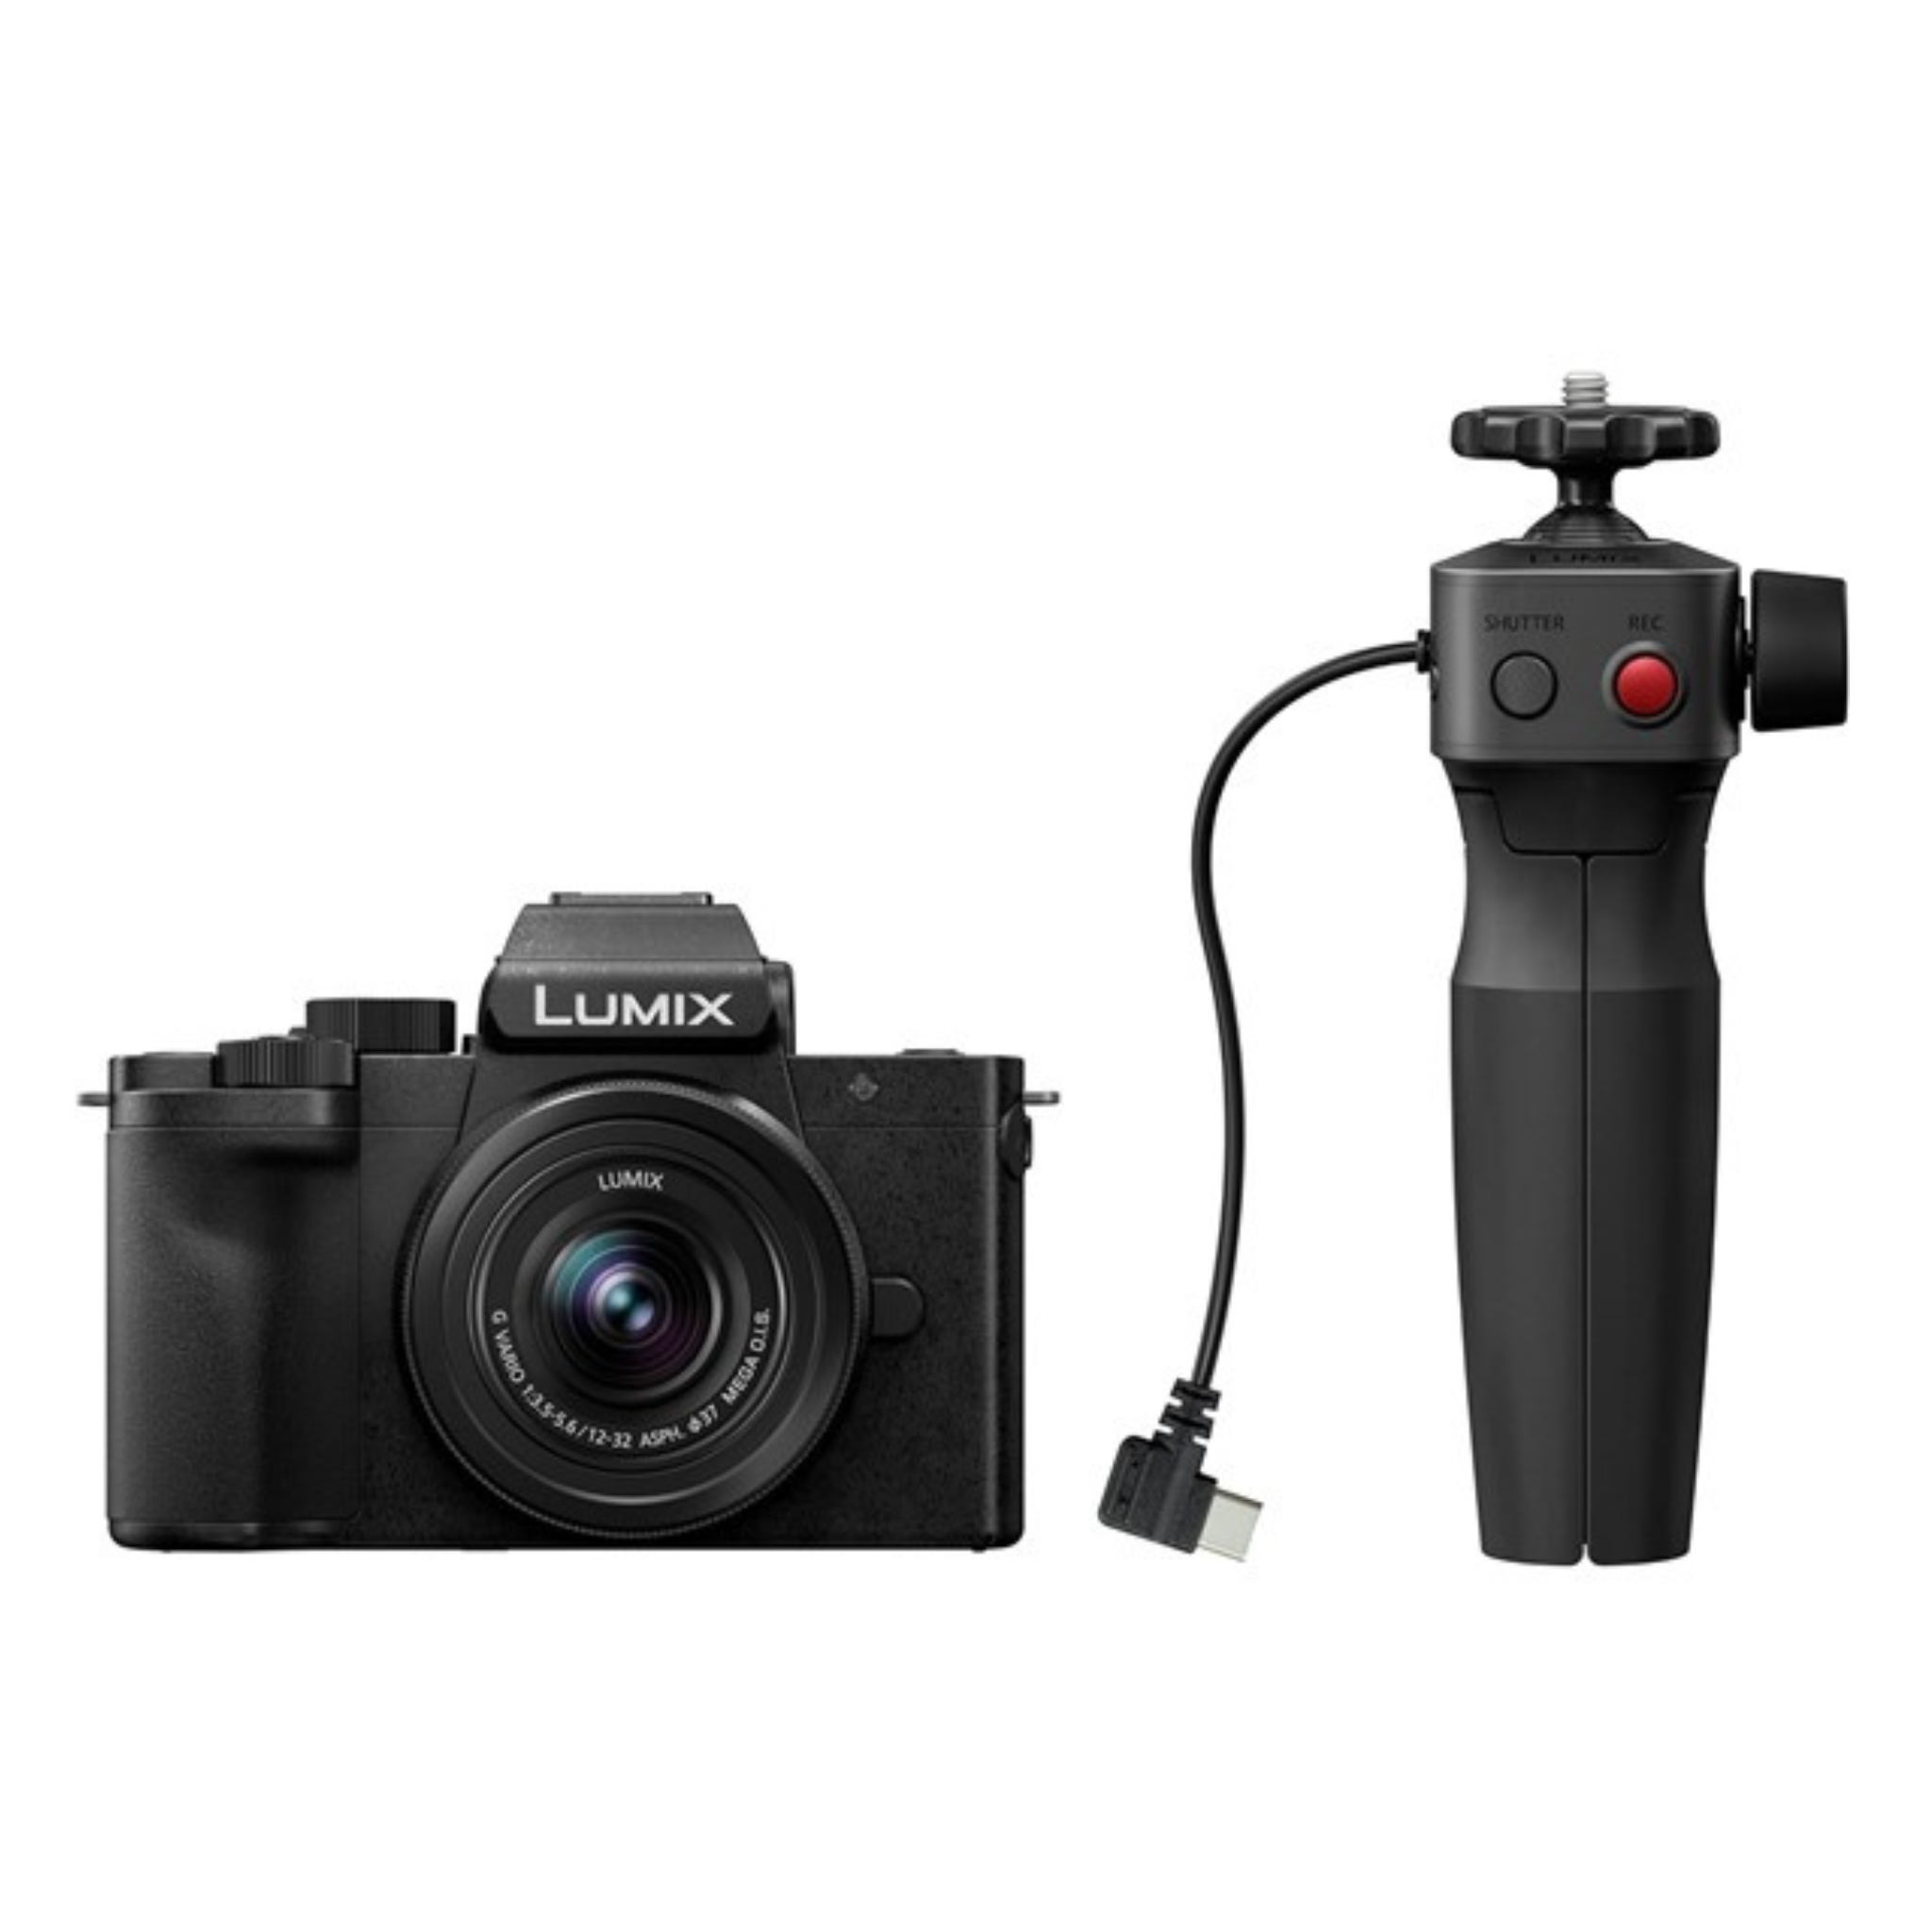 Panasonic Lumix DC-G100D Mirrorless Camera with G Vario 12-32mm f/3.5-5.6 ASPH OIS Lens and Tripod Grip